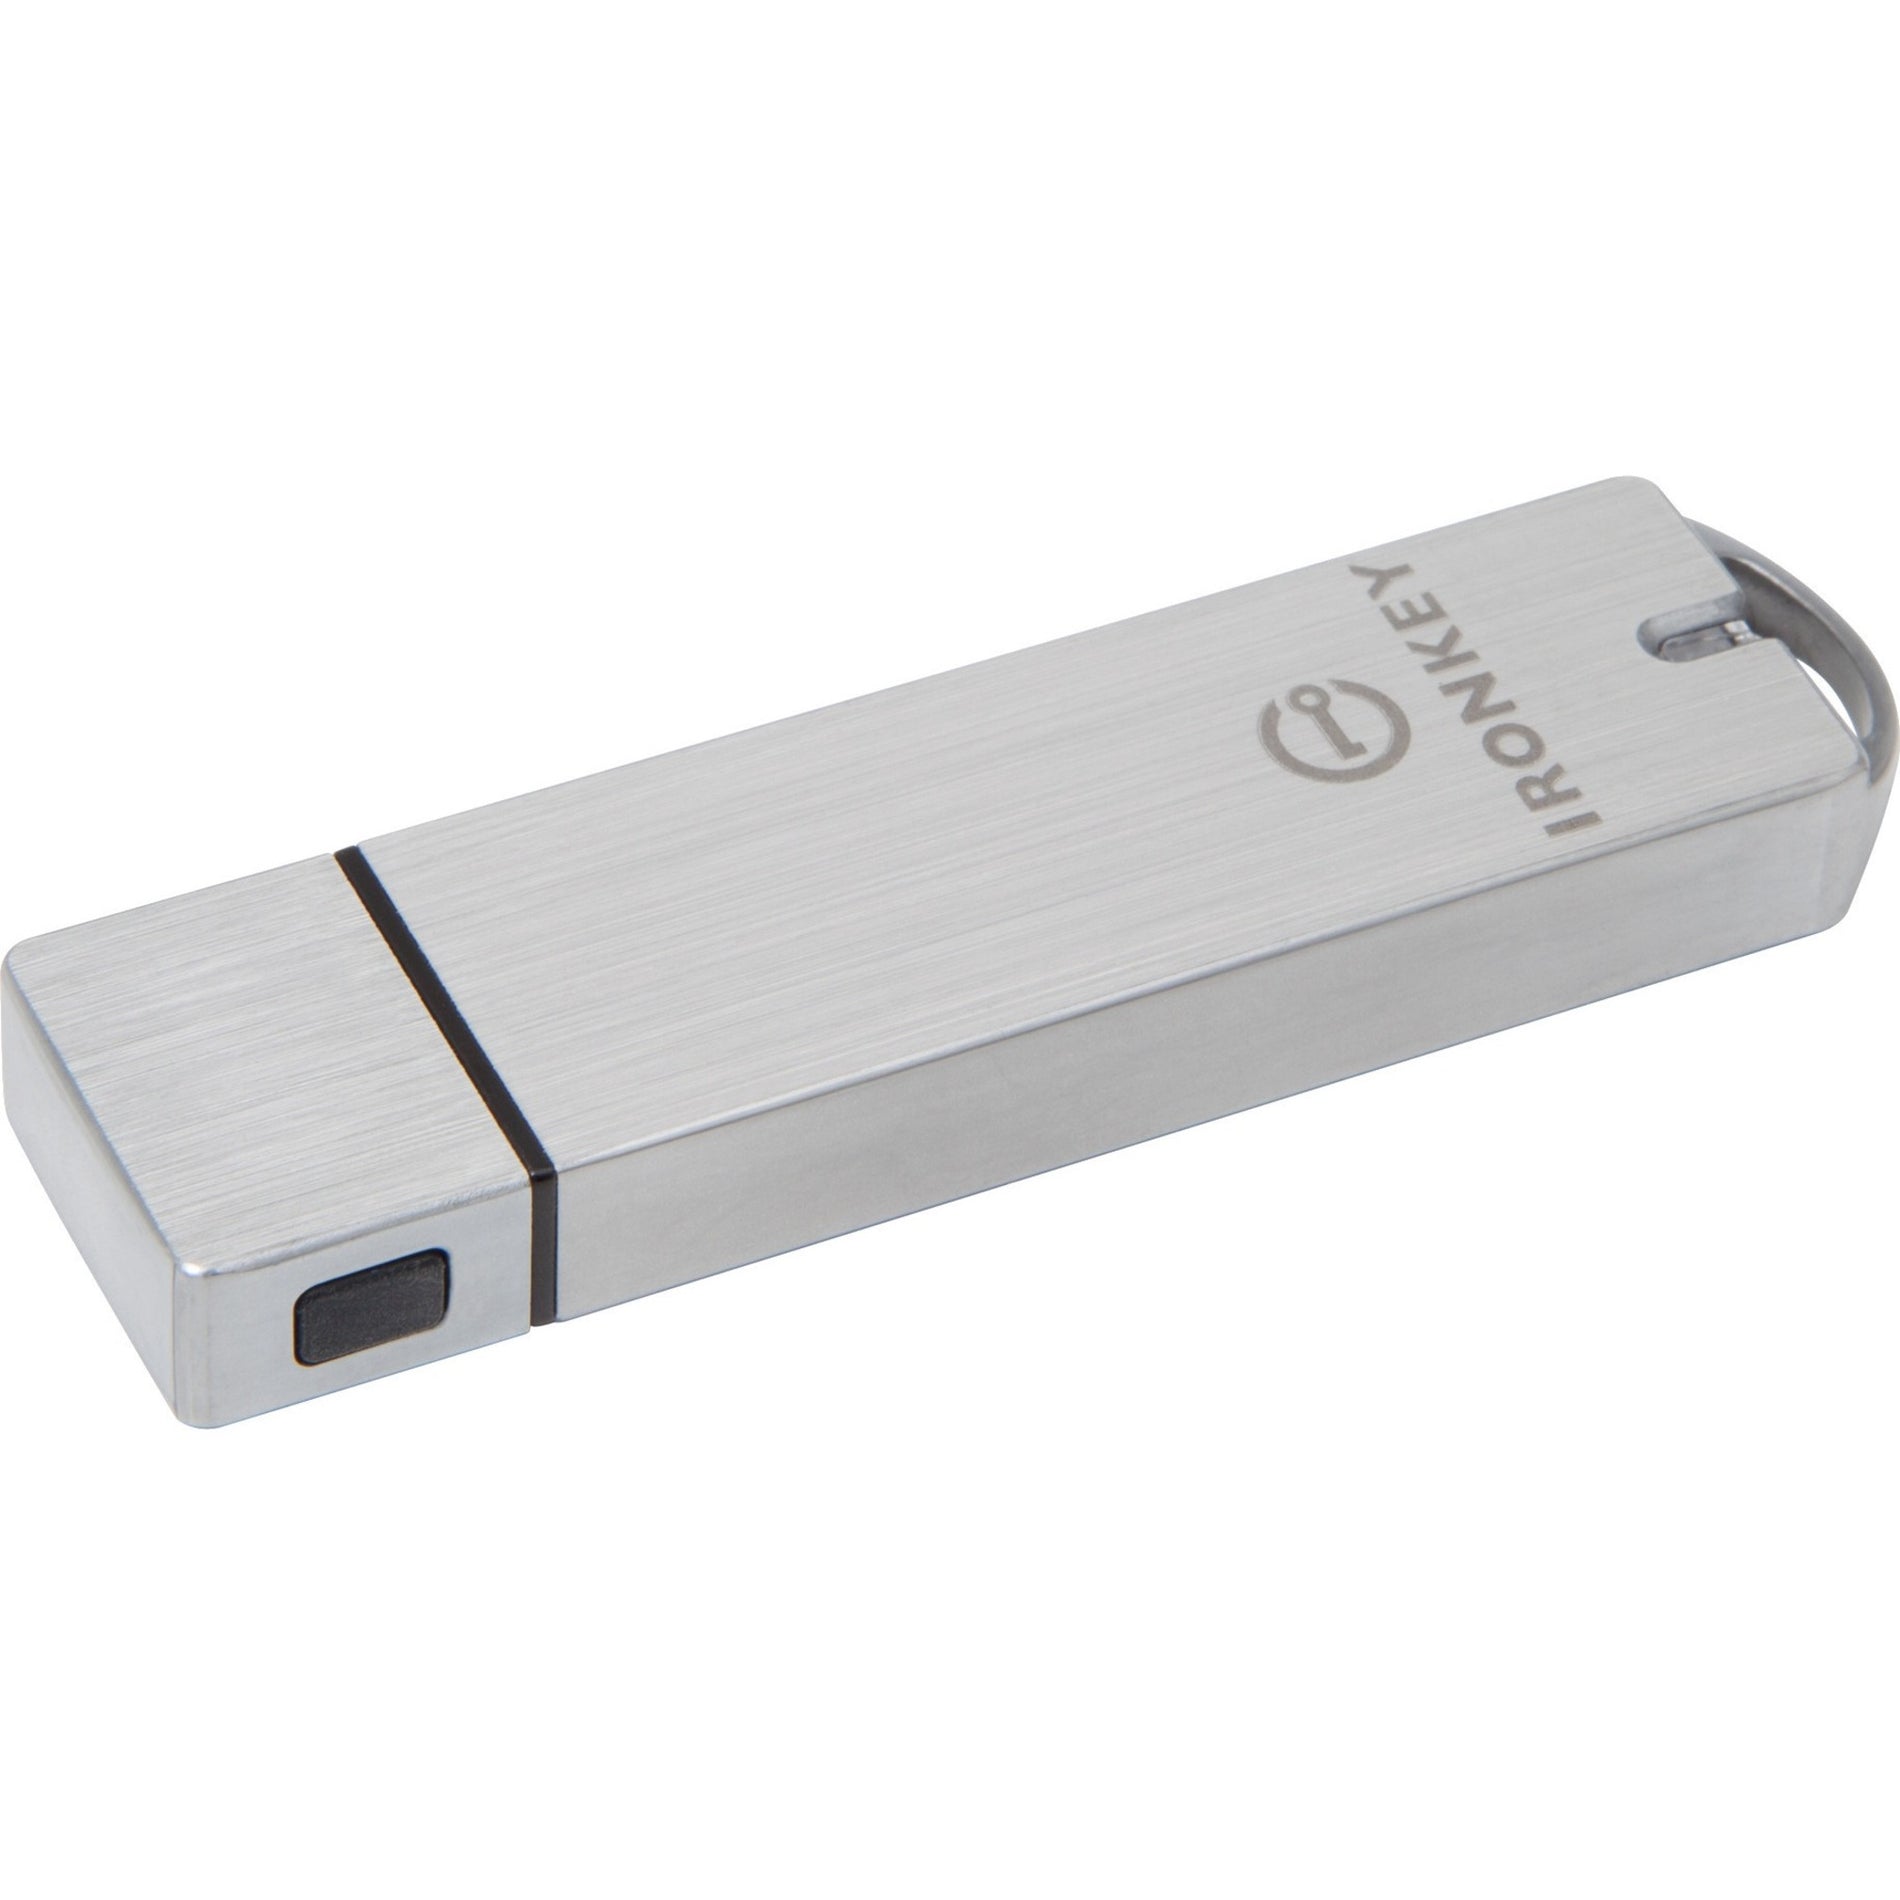 IronKey IKS1000B/8GB Basic S1000 Encrypted Flash Drive, 8GB USB 3.0, 256-bit AES Encryption